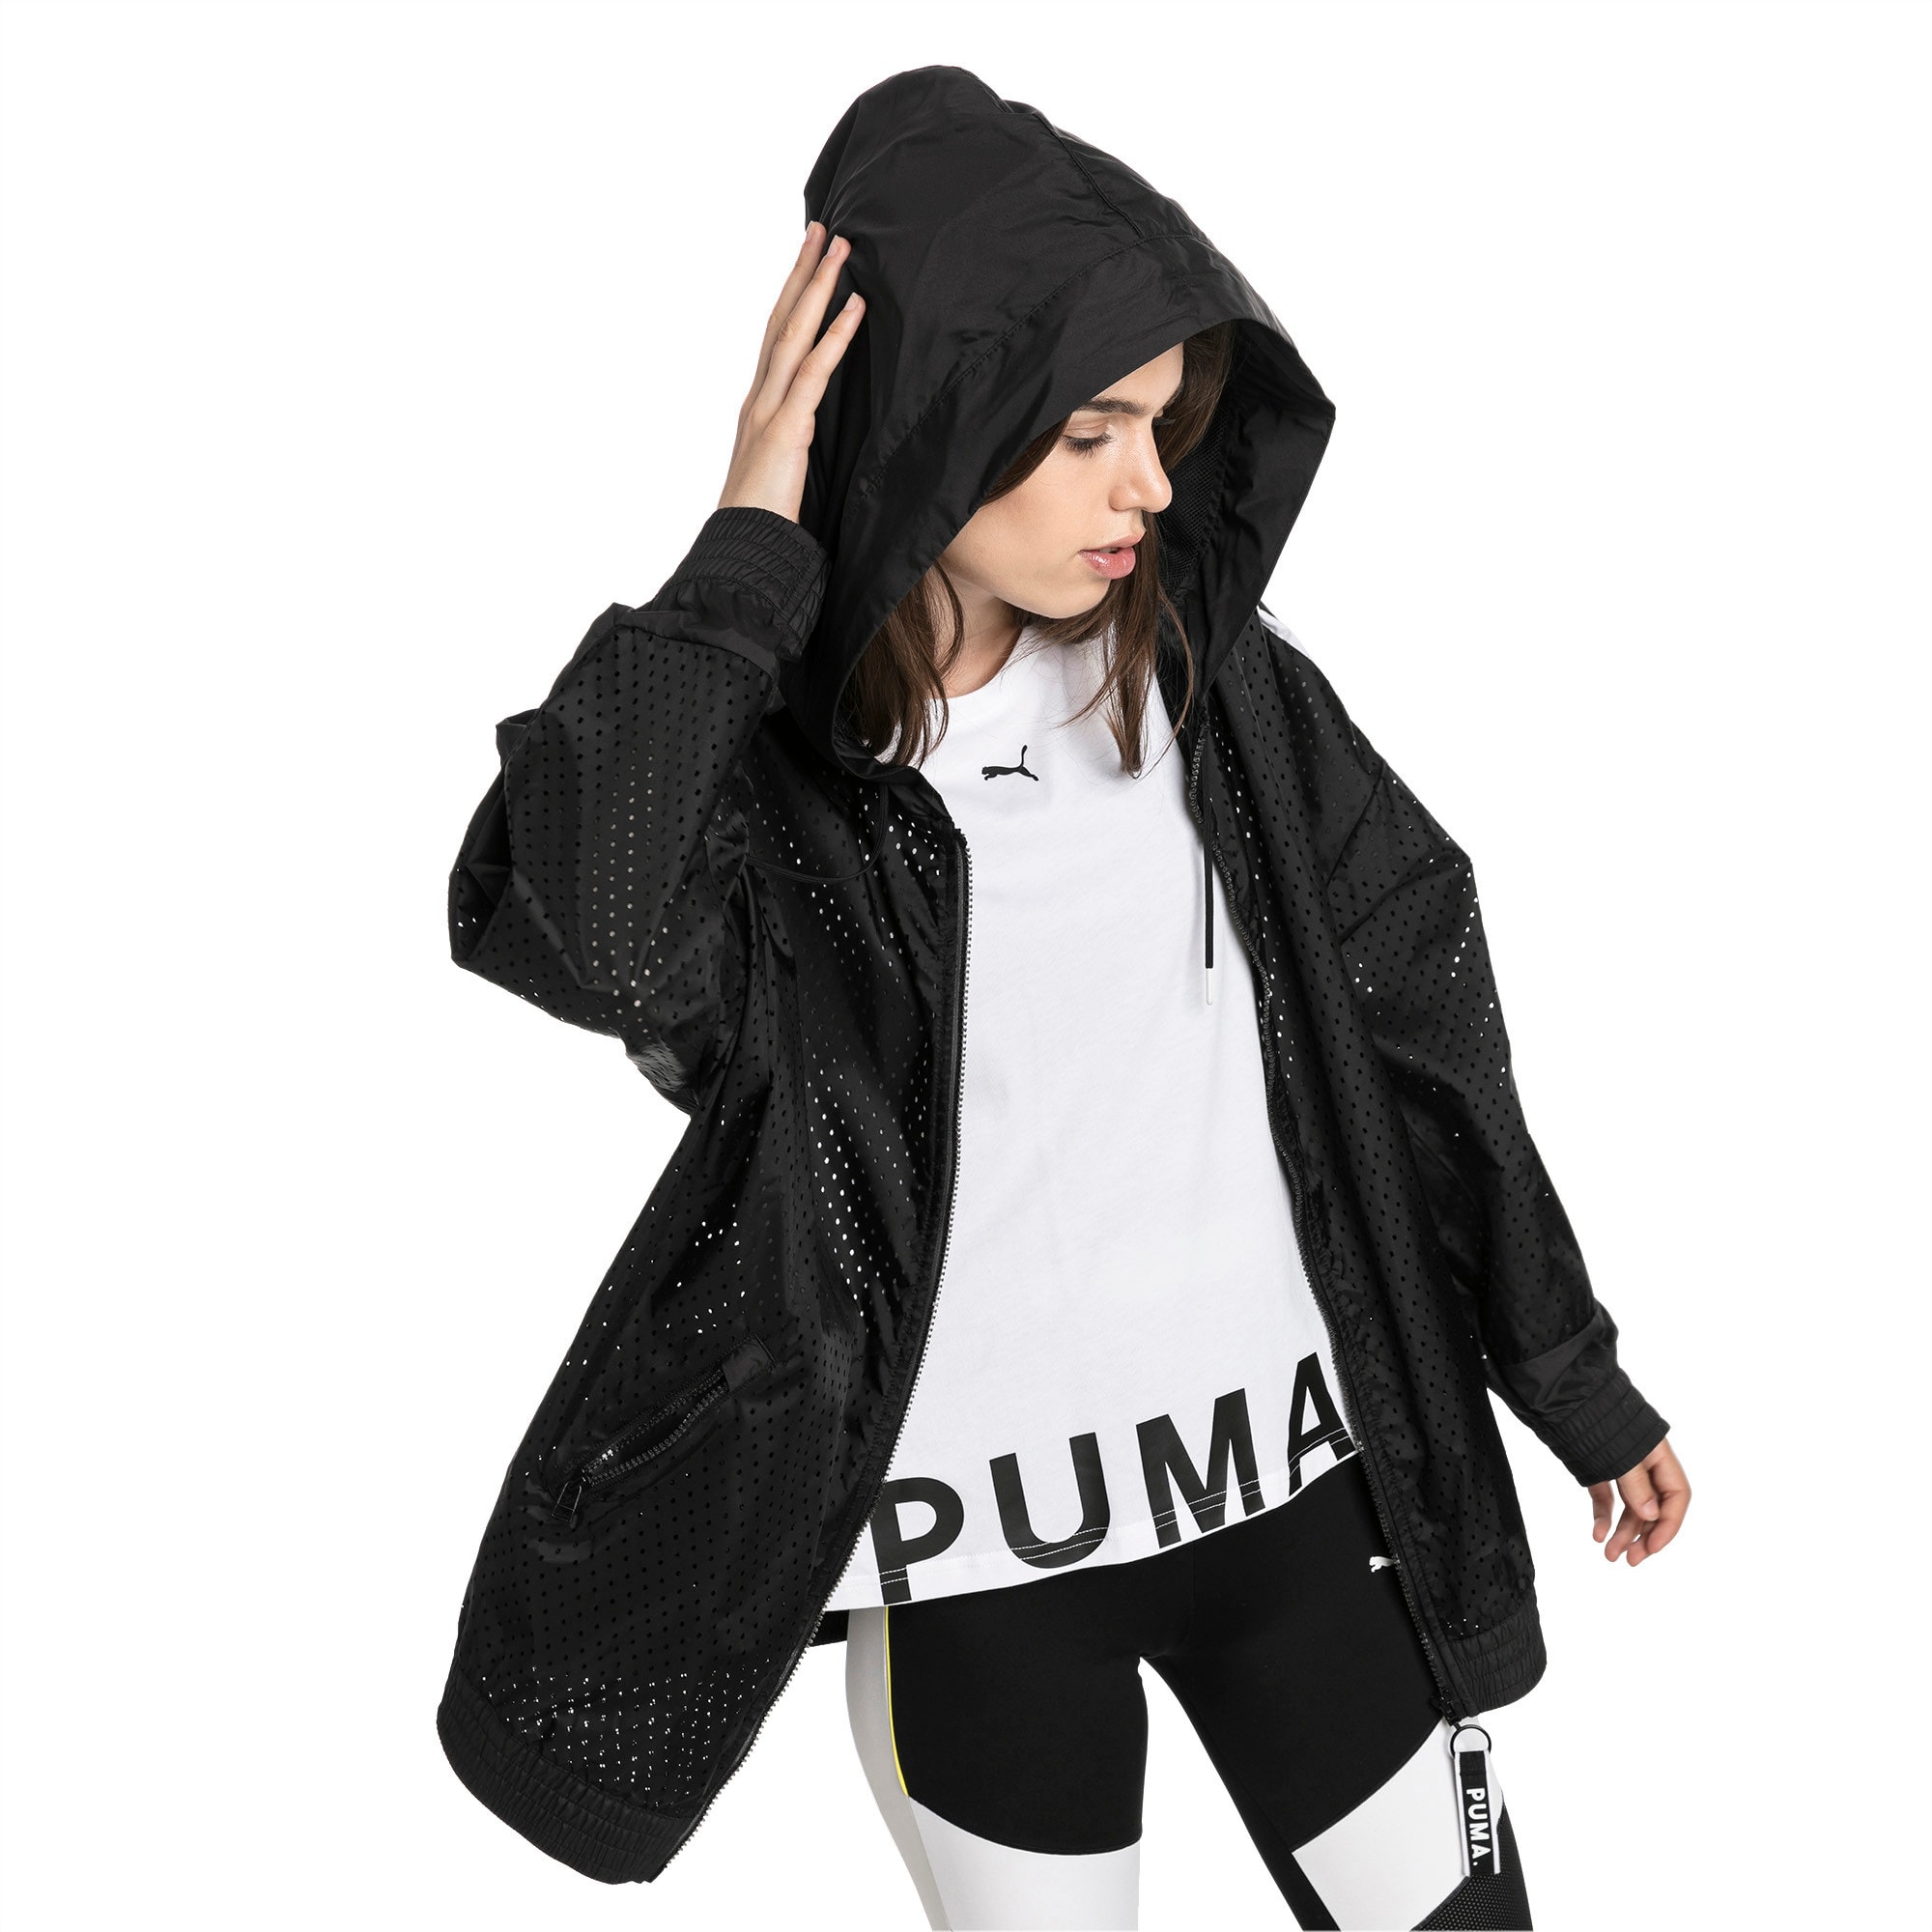 puma black jacket womens